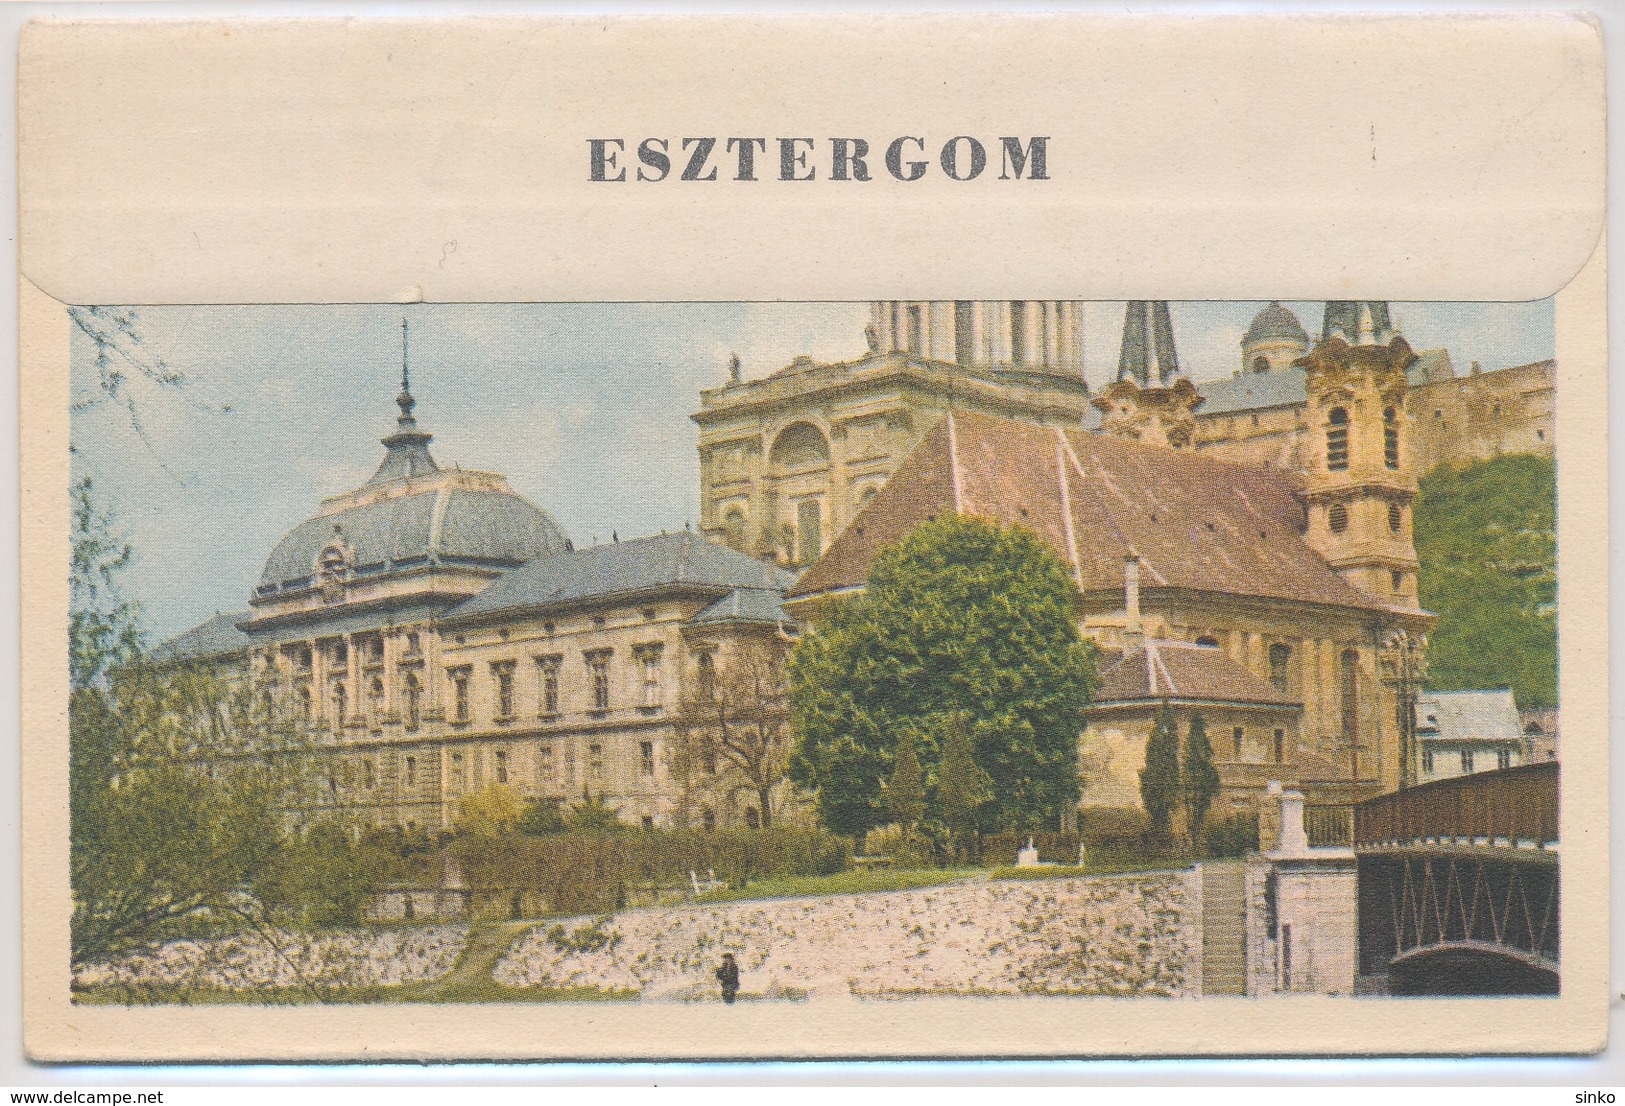 Esztergom. Leporello Postcard. - Hungary